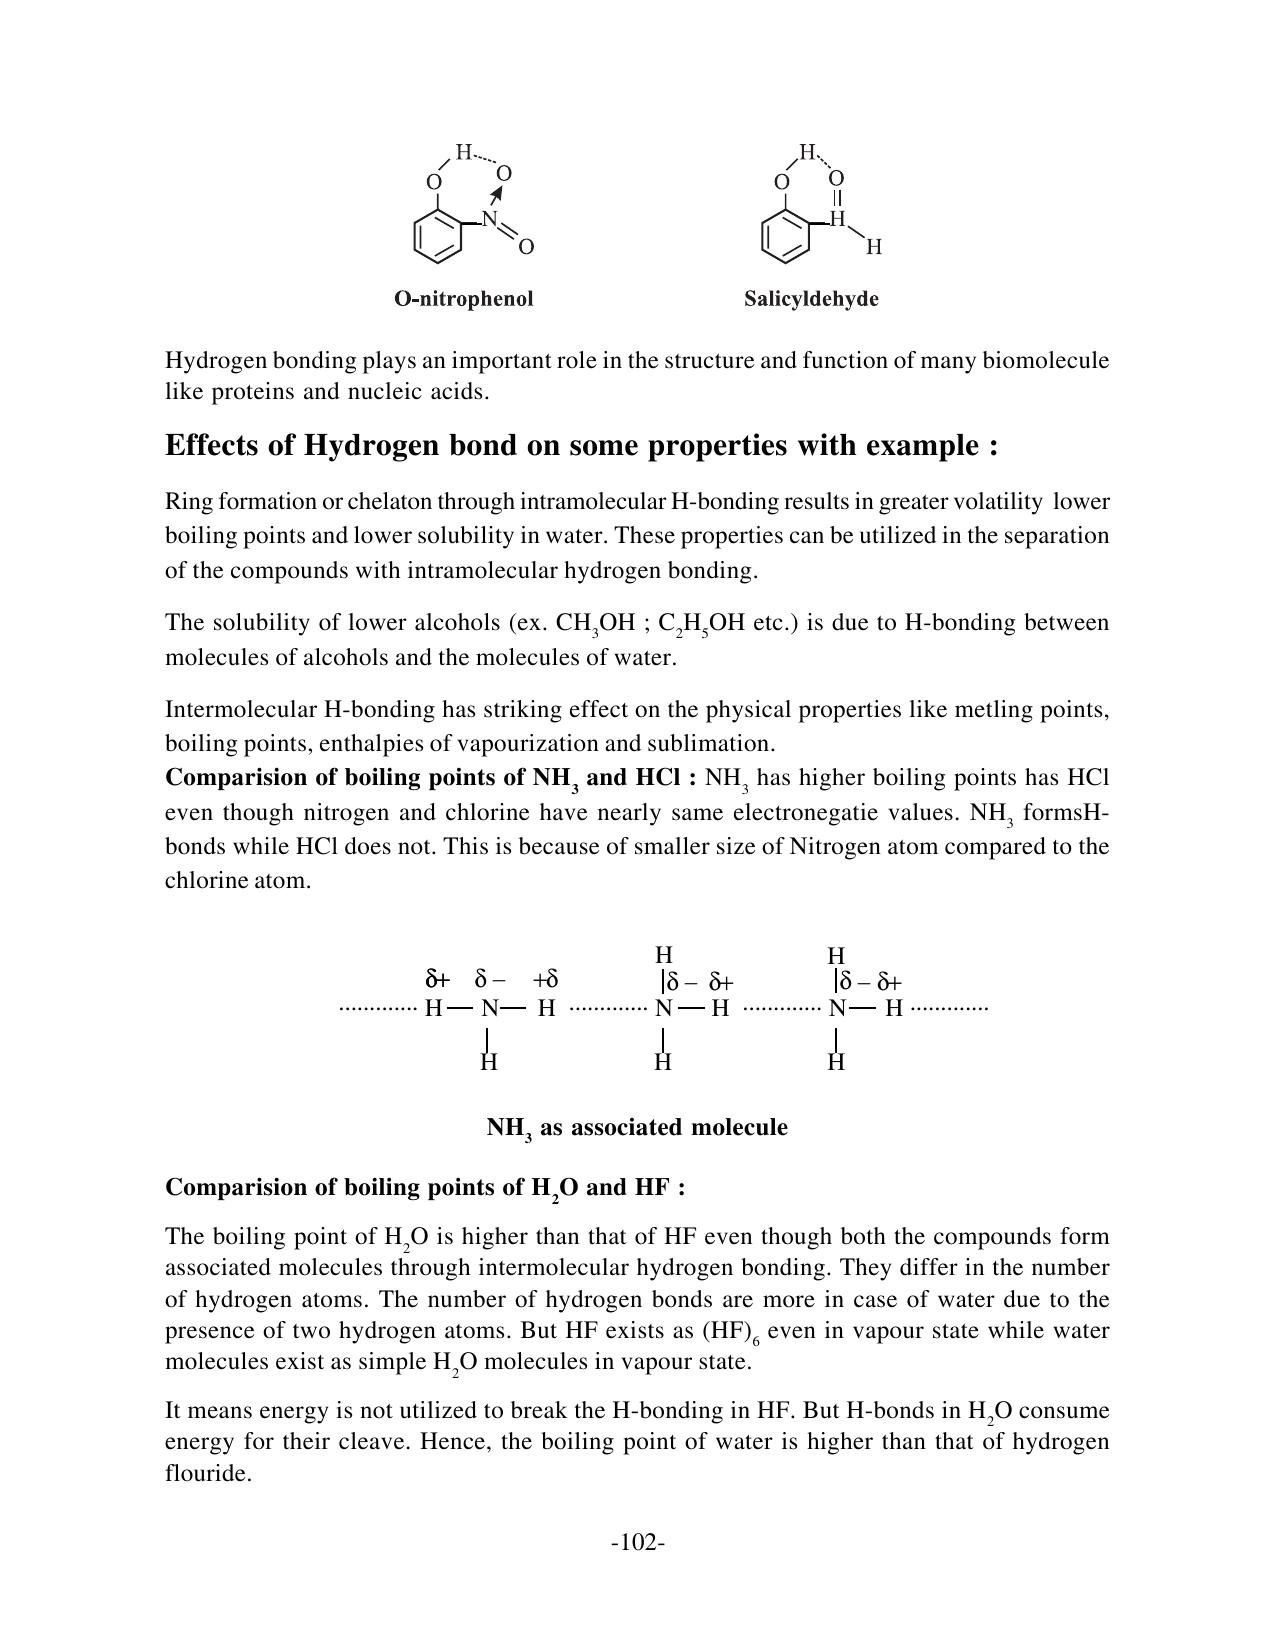 TS SCERT Inter 1st Year Chemistry Vol – I Path 1 (English Medium) Text Book - Page 111